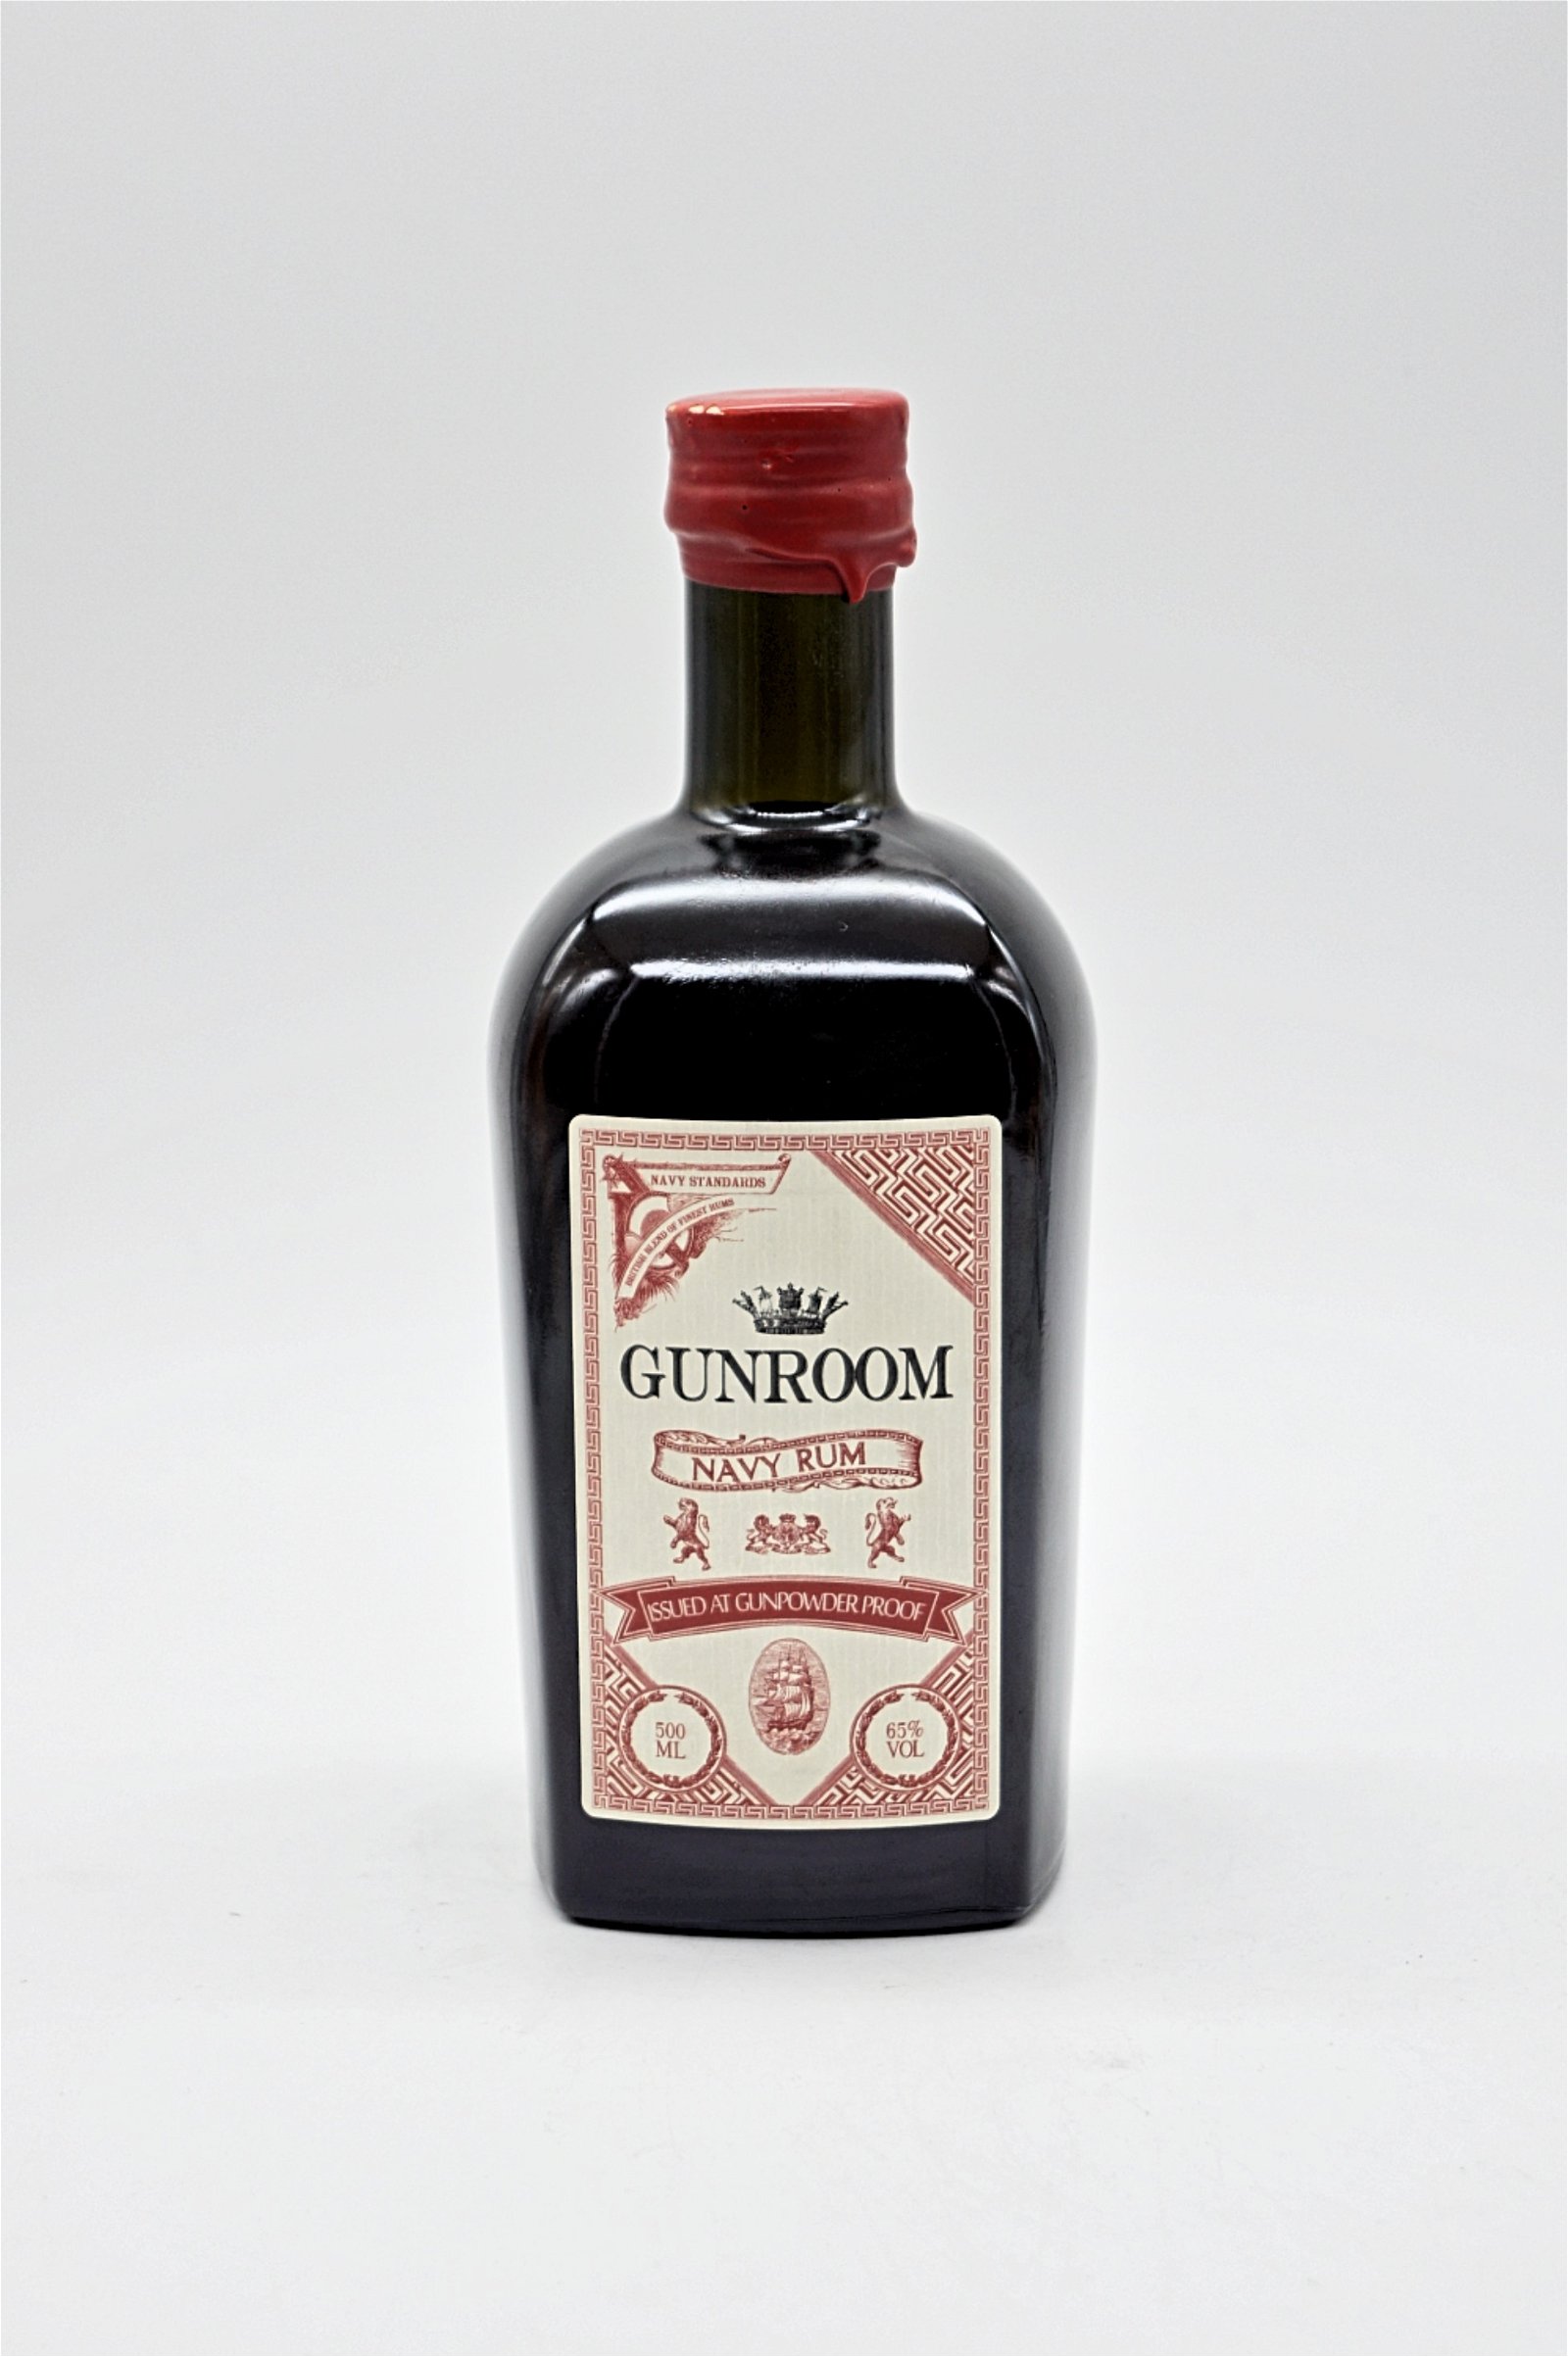 Gunroom Navy Rum "Issued at Gunpowder Proof"